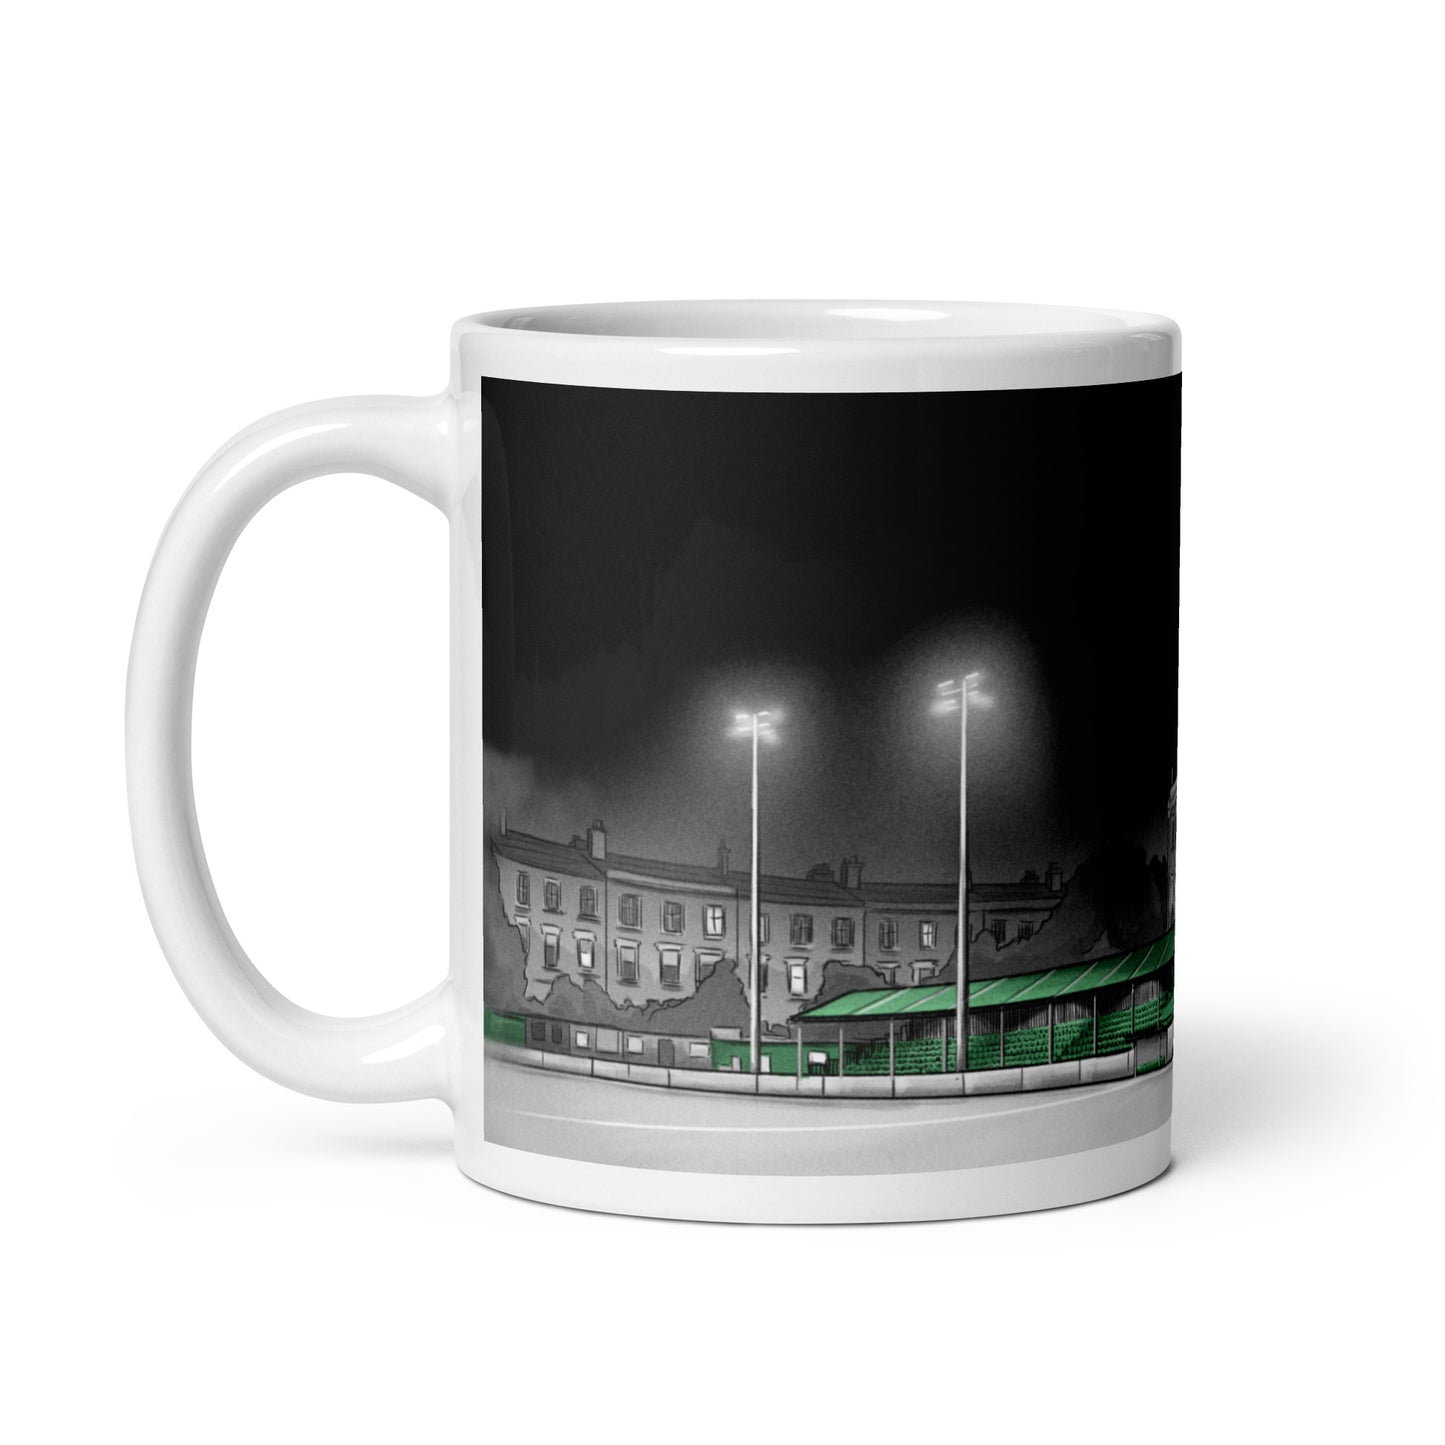 The Carlisle Grounds glossy mug